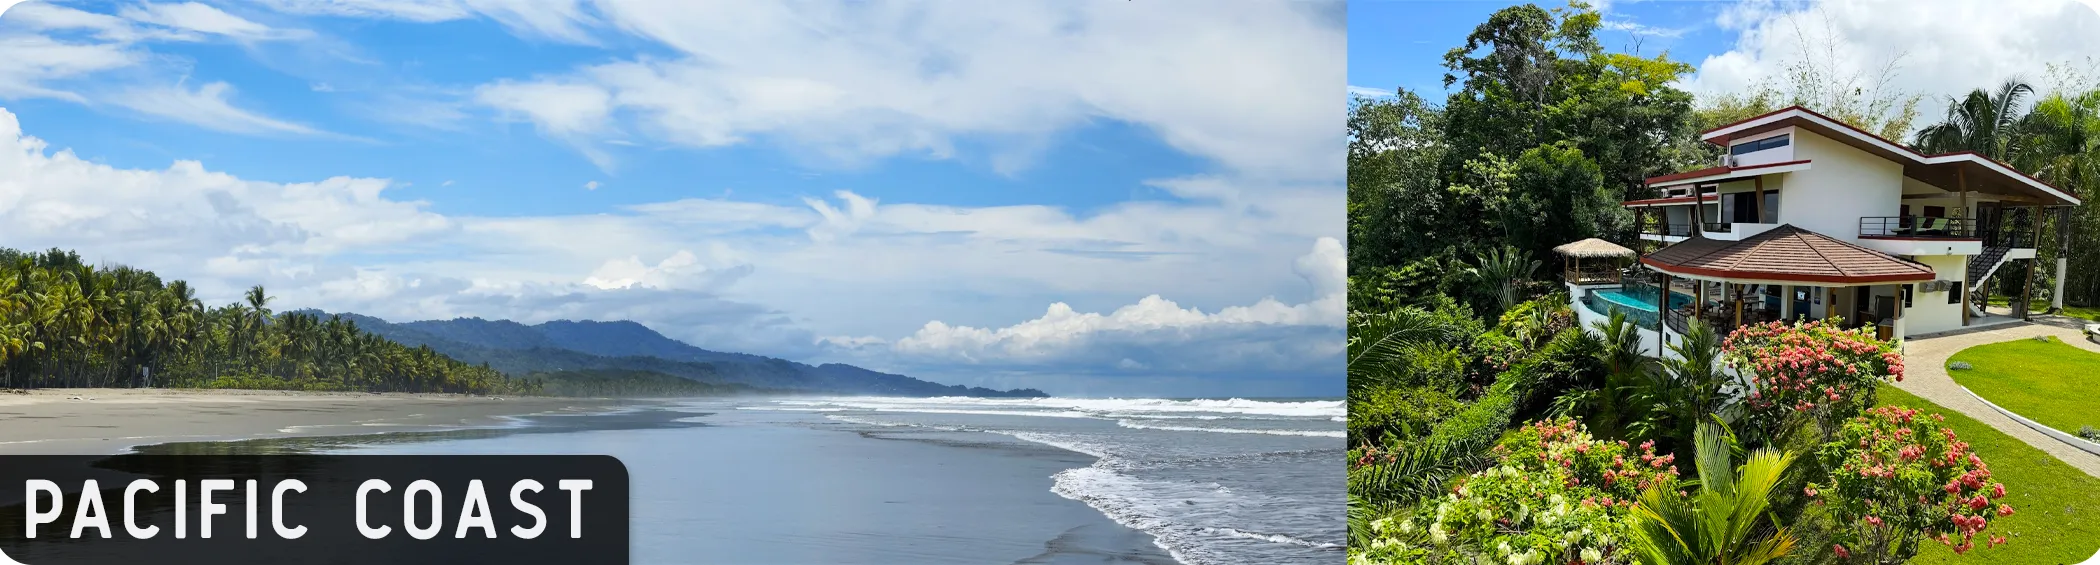 Lapazul, Pacific Coast, Costa Rica